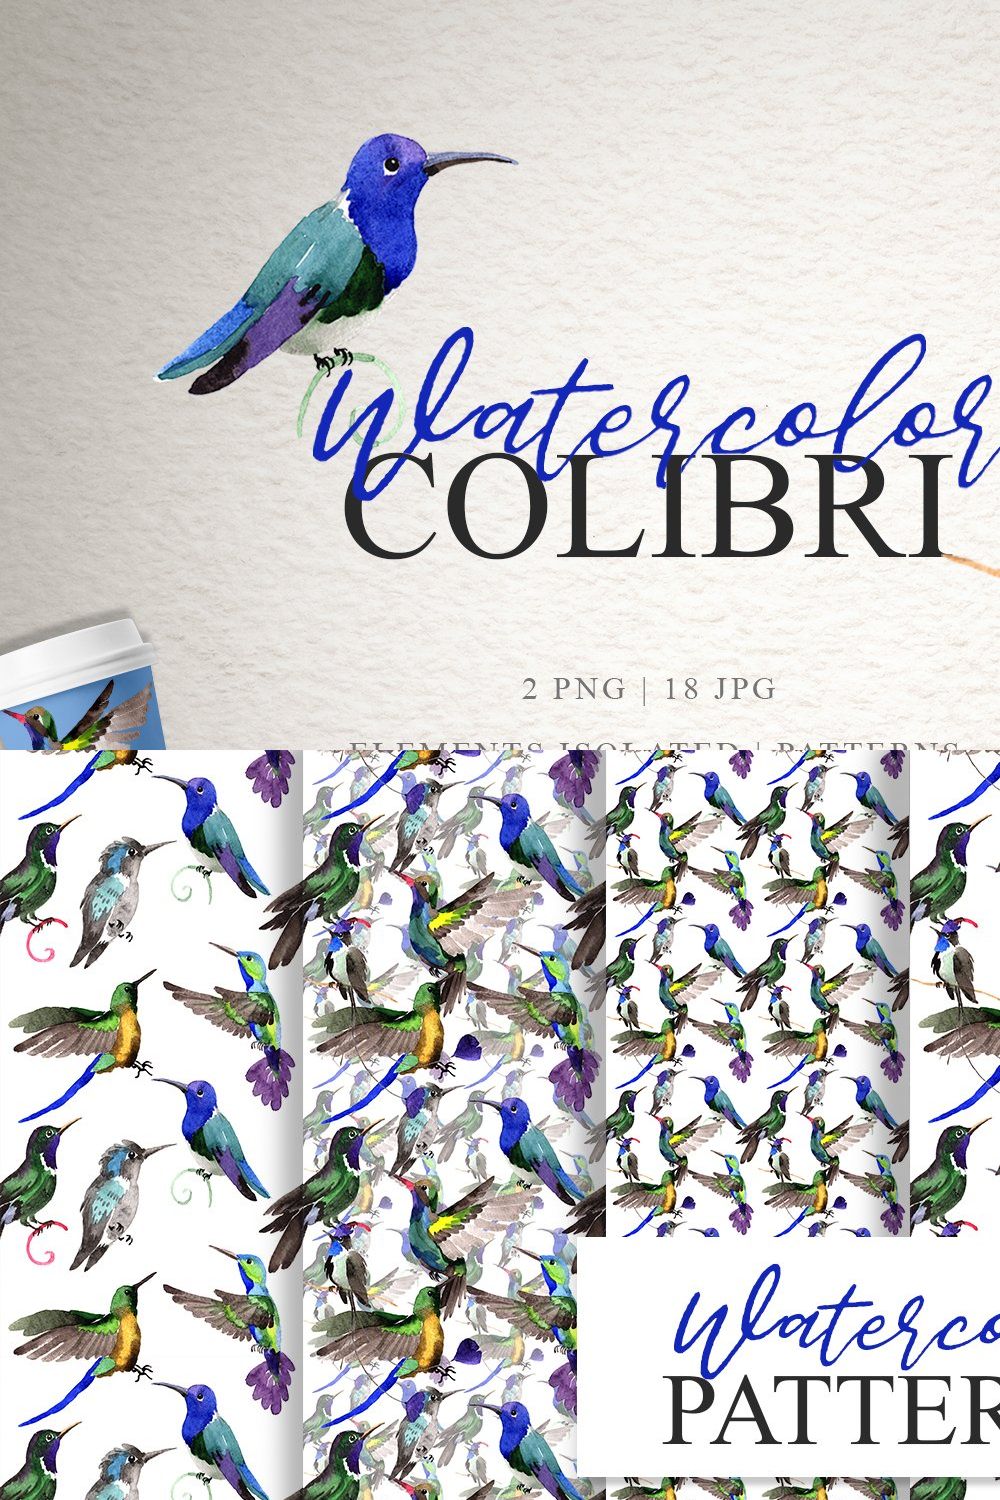 Colibri Watercolor png pinterest preview image.